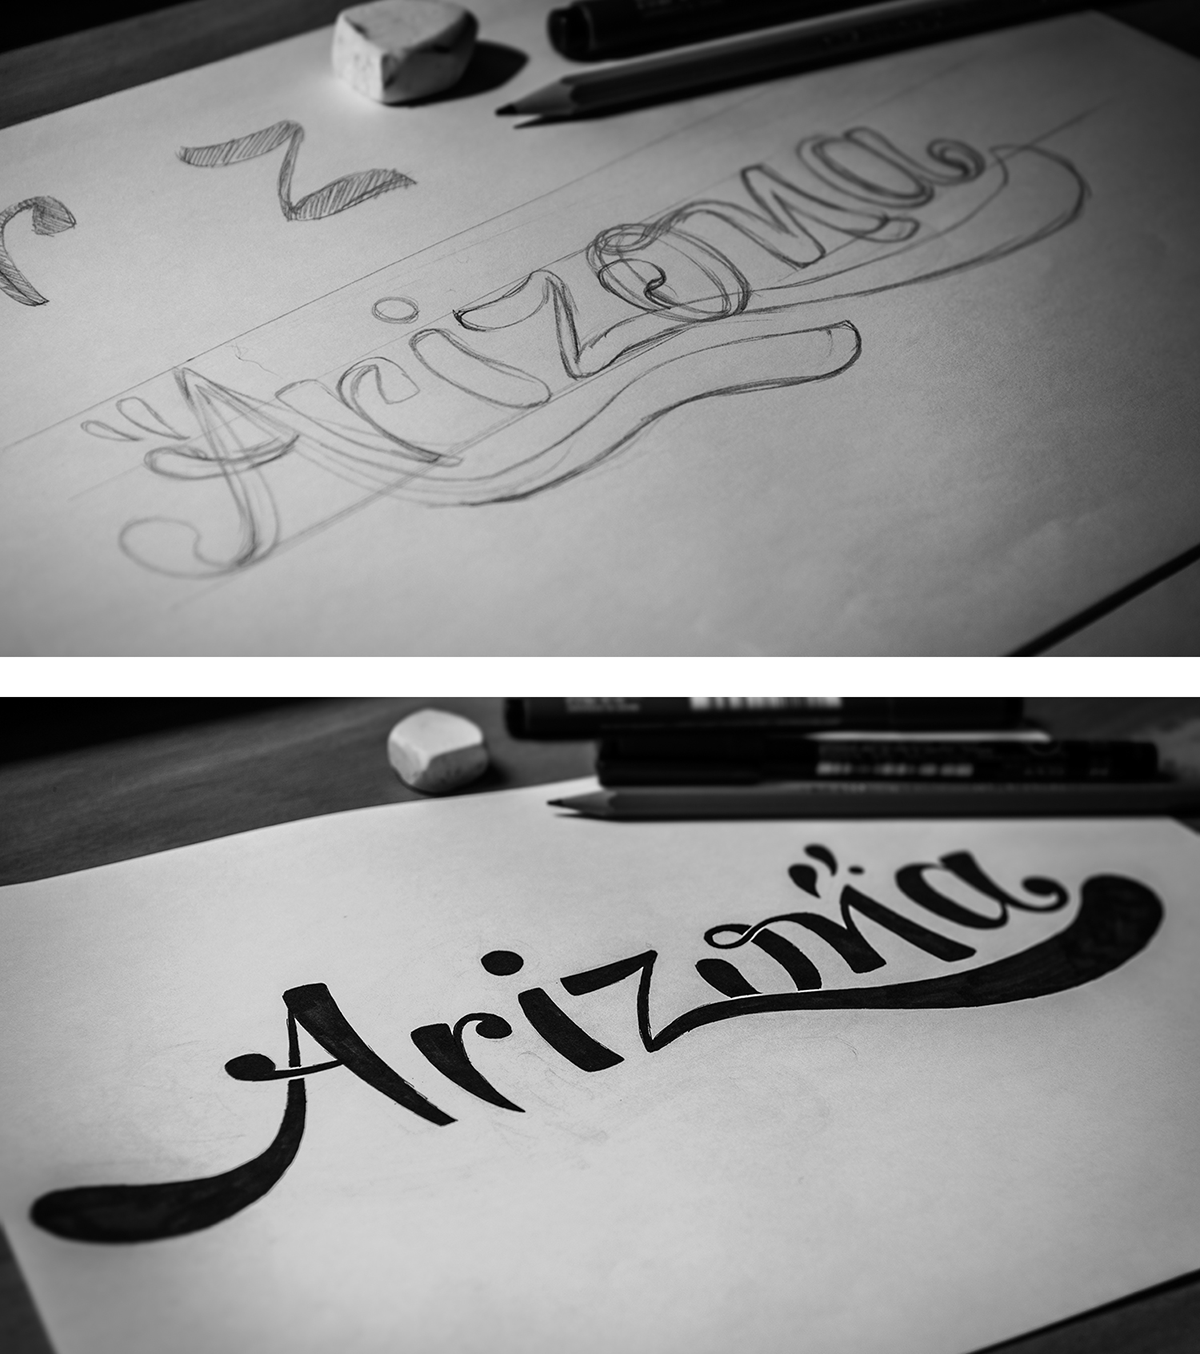 portfolio jesse mogensen typo design paper pen digital pencil freehand lettering logo brush ink type